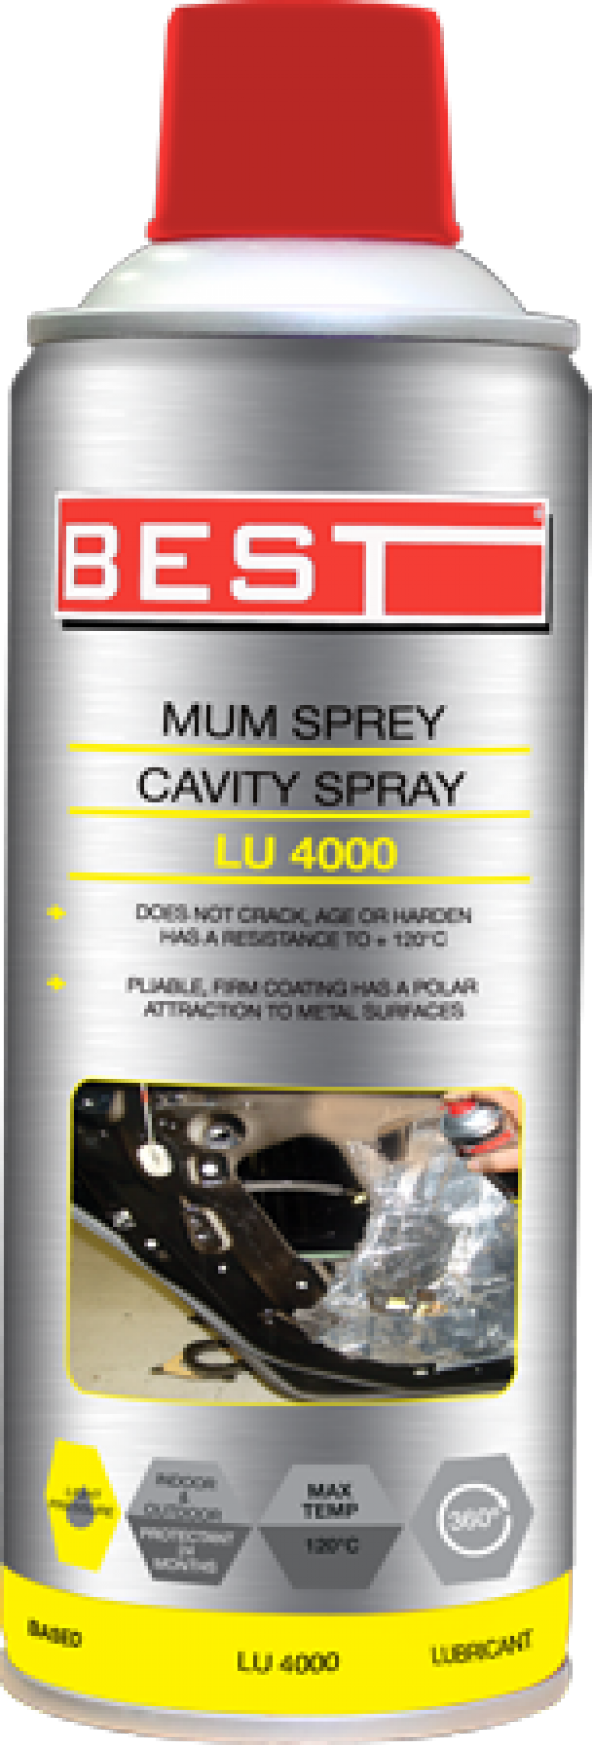 Best Lu 4000 Mum Spray 313-187